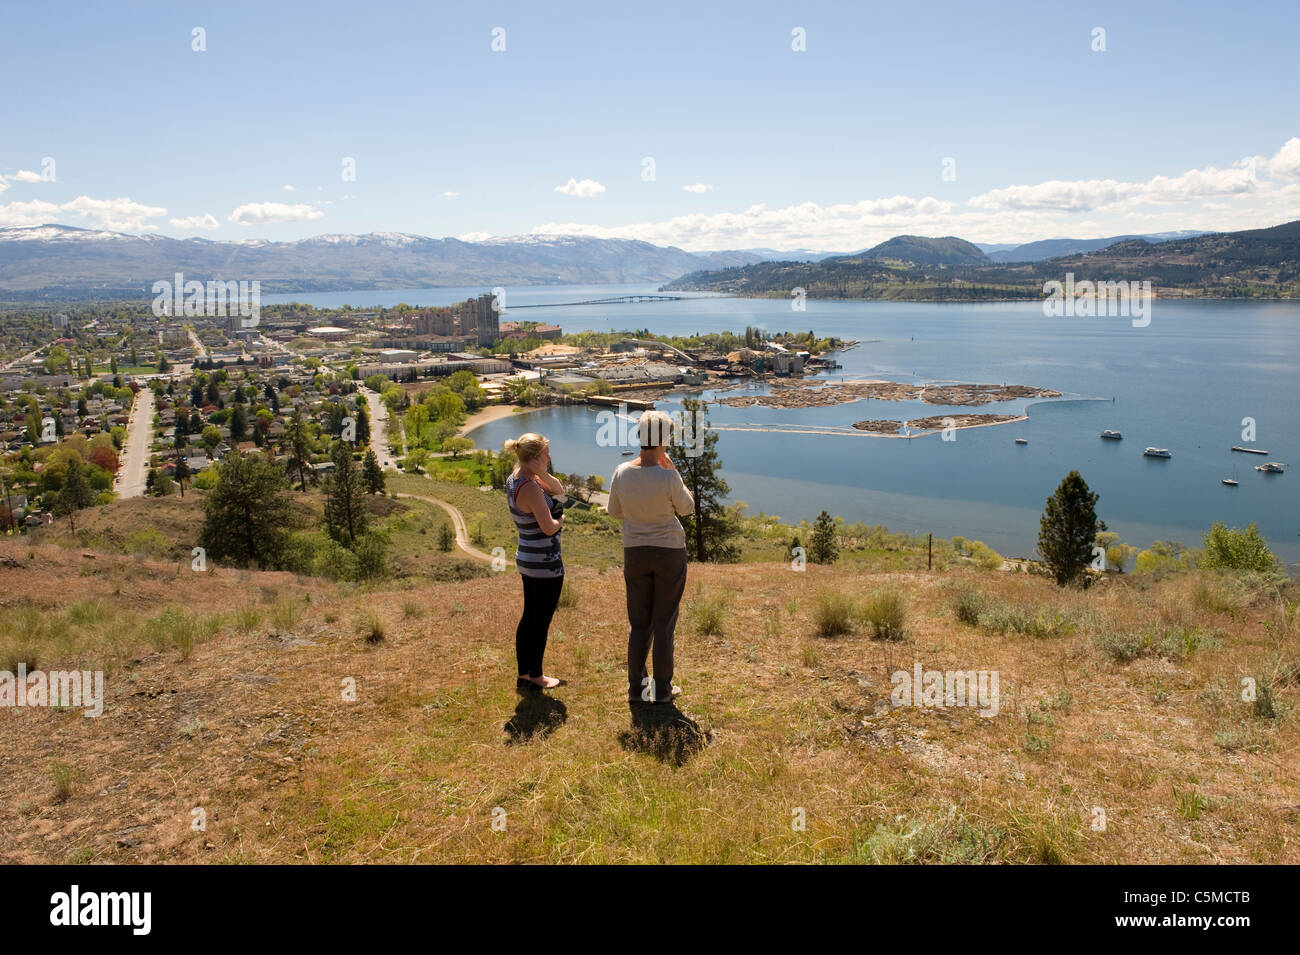 Tourists admiring a view over Okanagan Lake in Kelowna, Canada Stock Photo